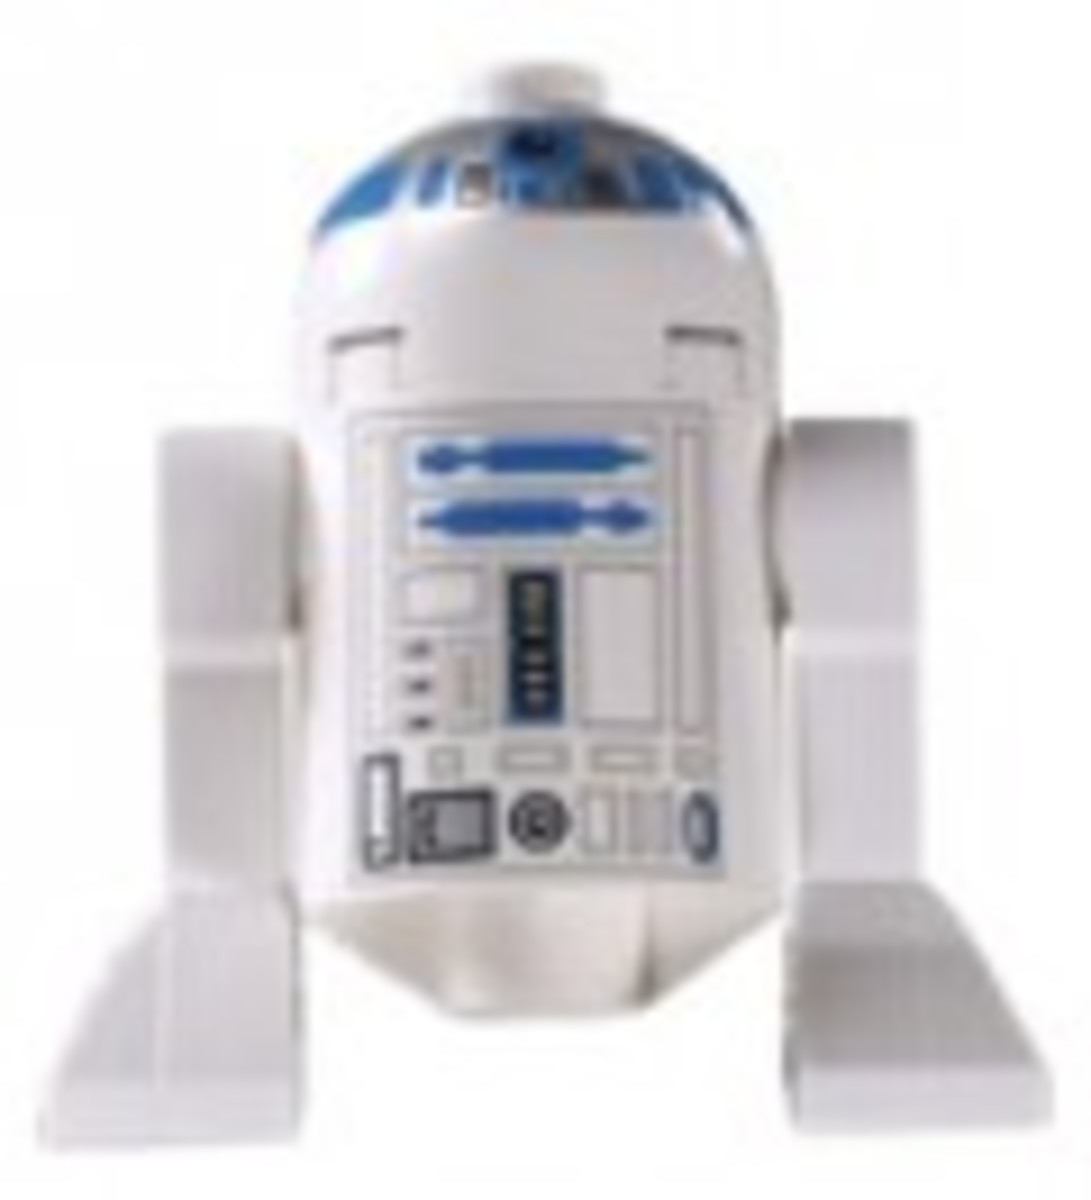 Lego Star Wars X-Wing Fighter 7191 Minifigure R2-D2